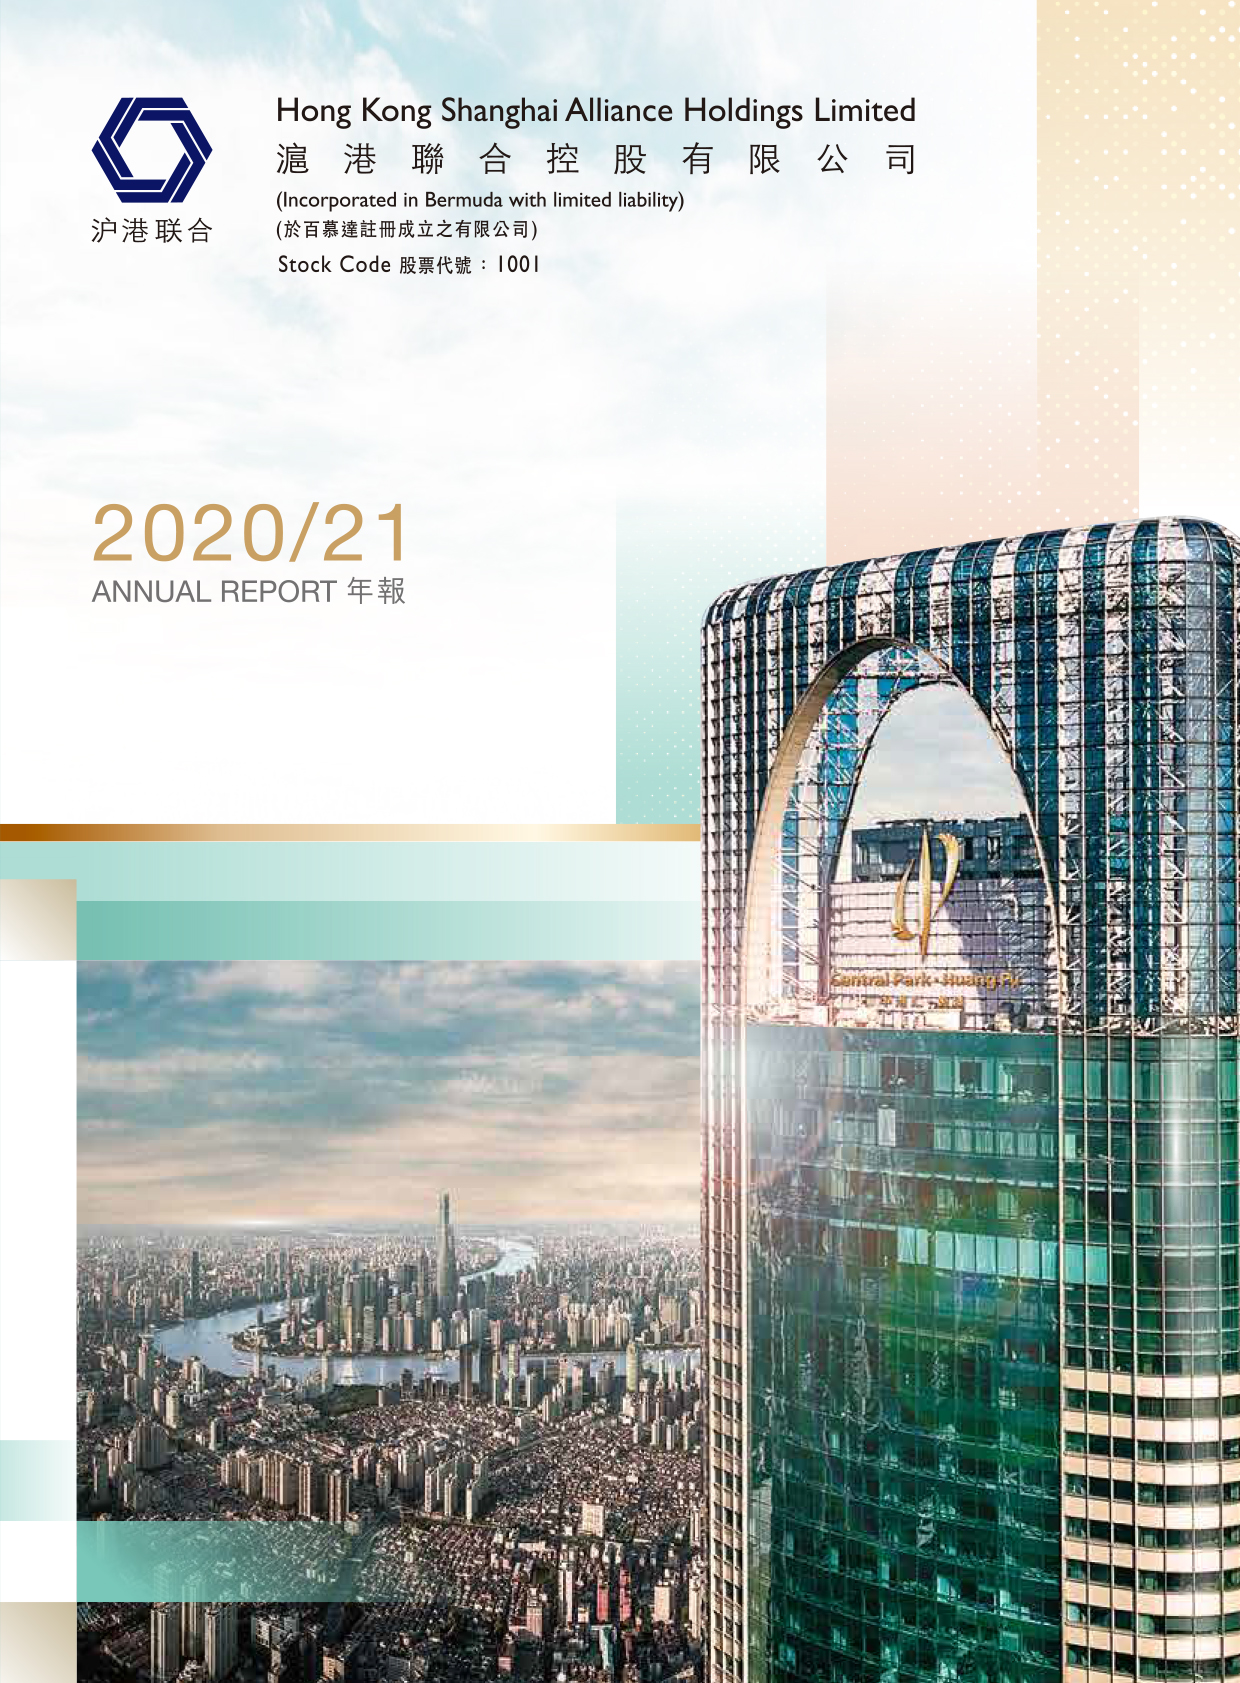 Hong Kong Shanghai Alliance Holdings Limited